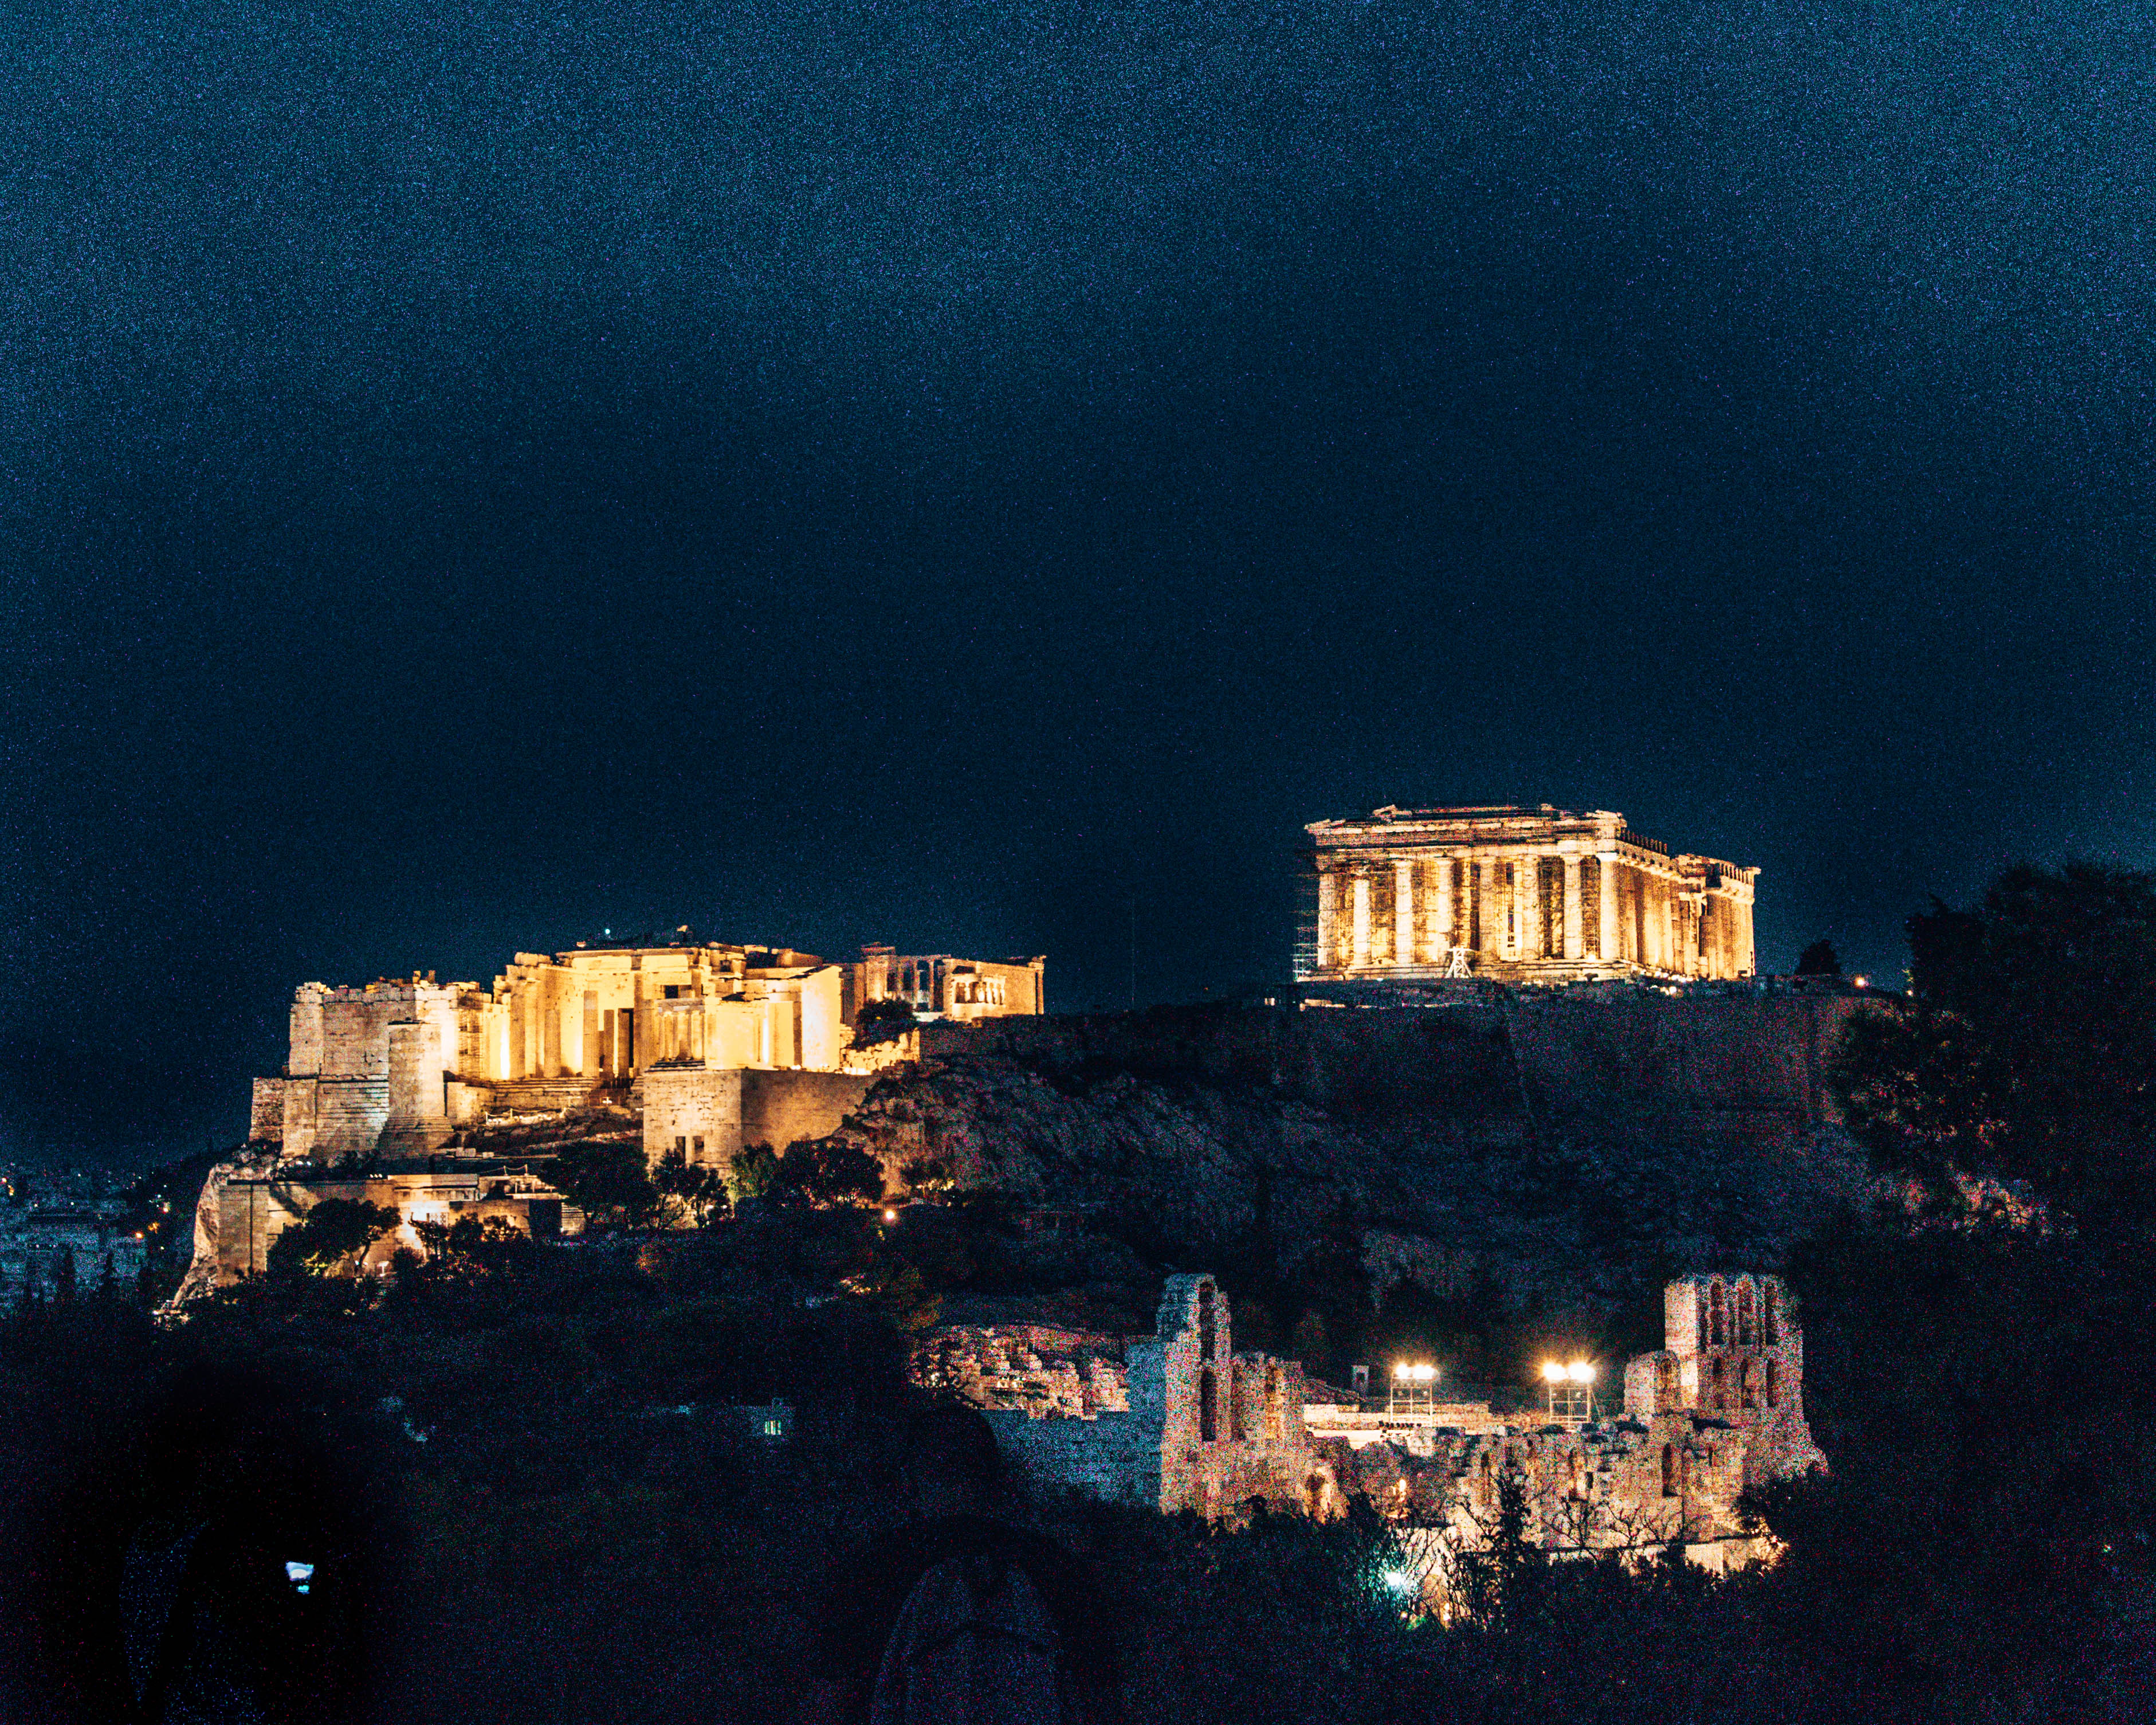 Acropolis at night Athens Greece 2